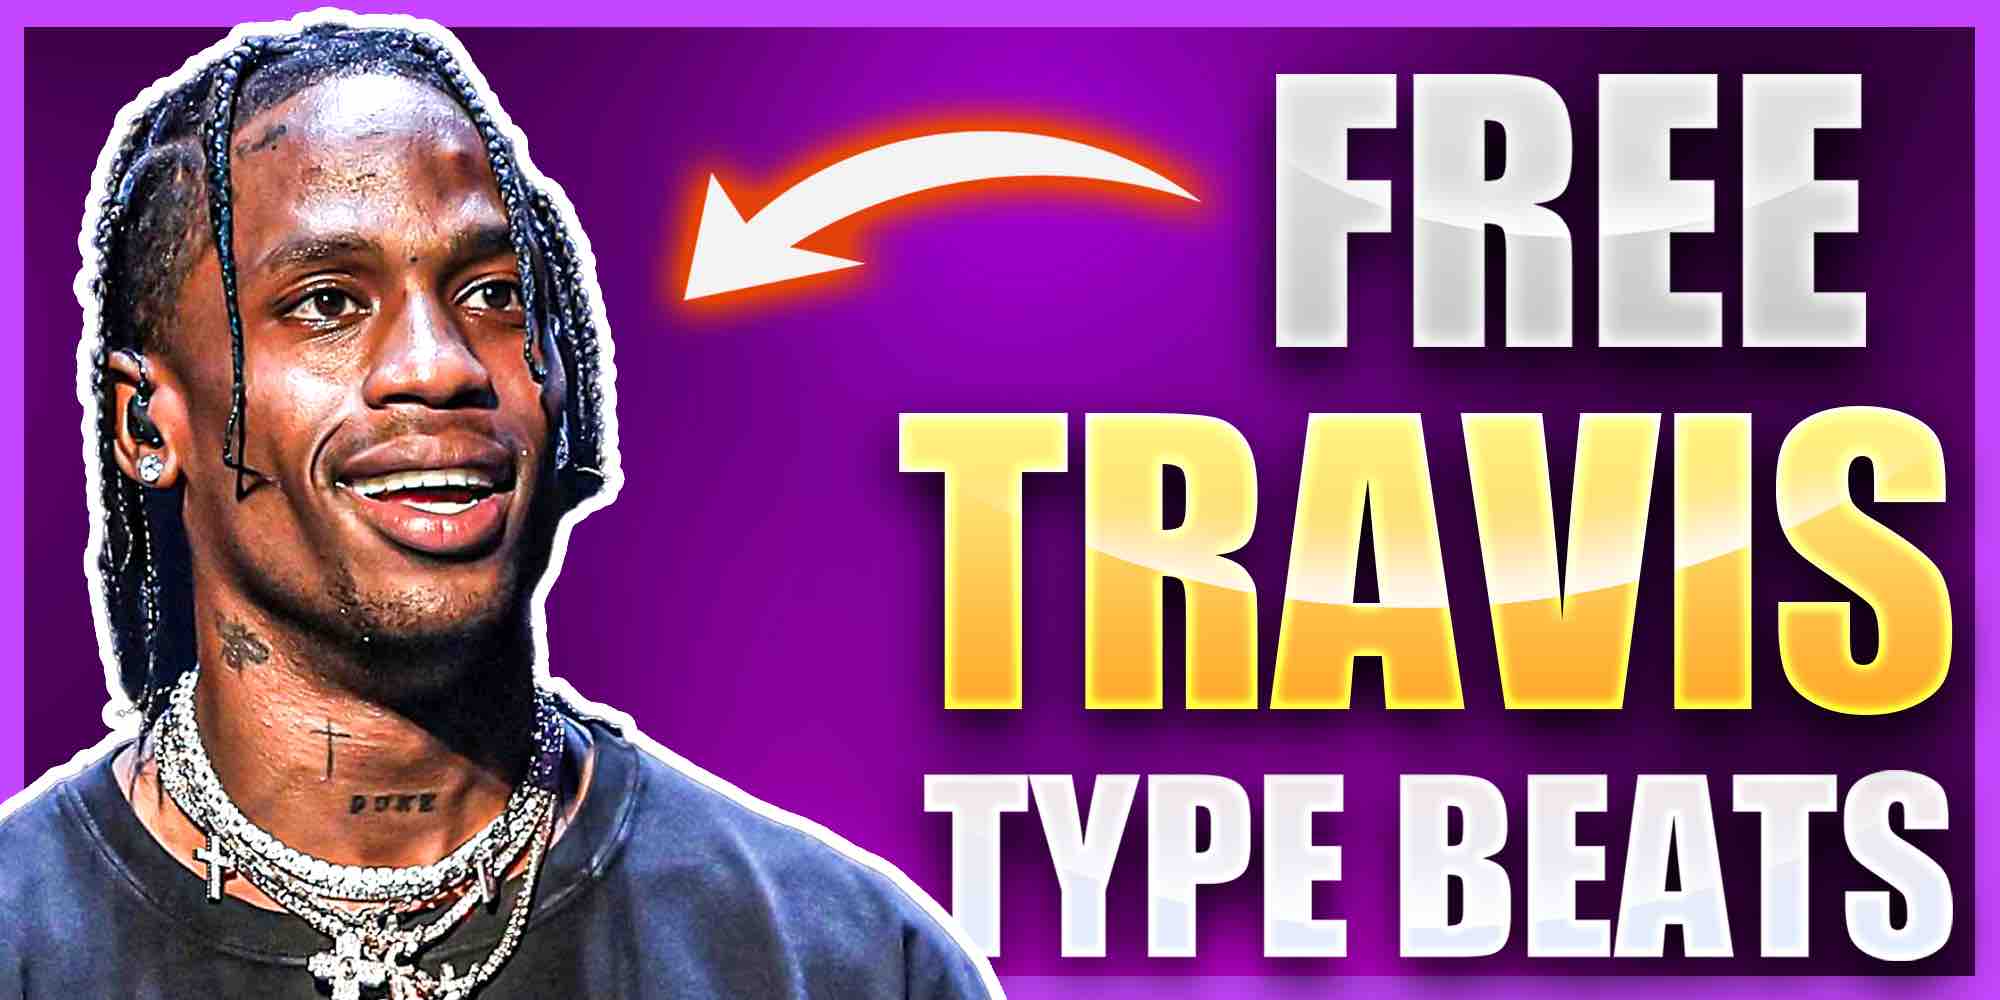 Free Travis Scott Type Beat